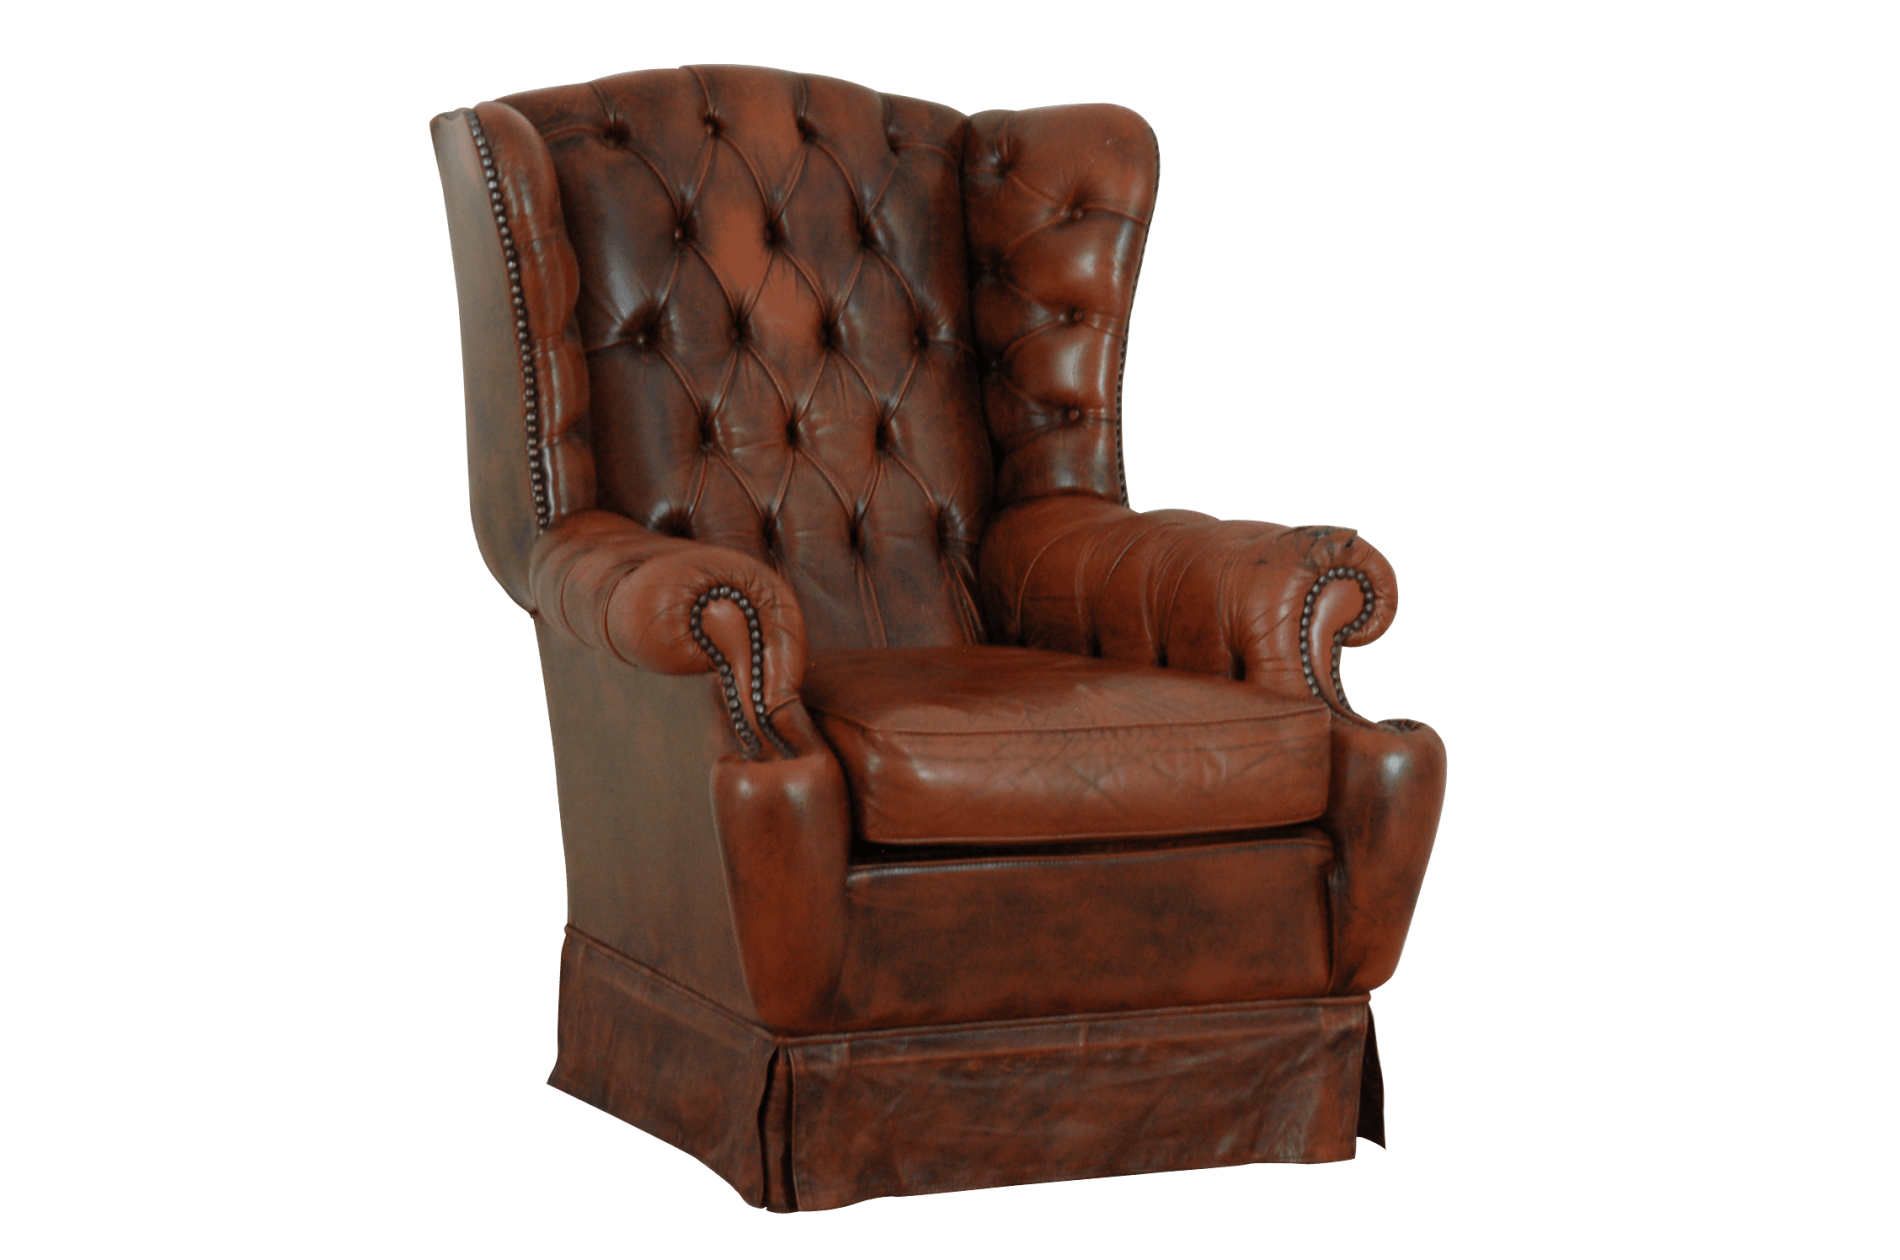 Vintage chesterfield highback chair